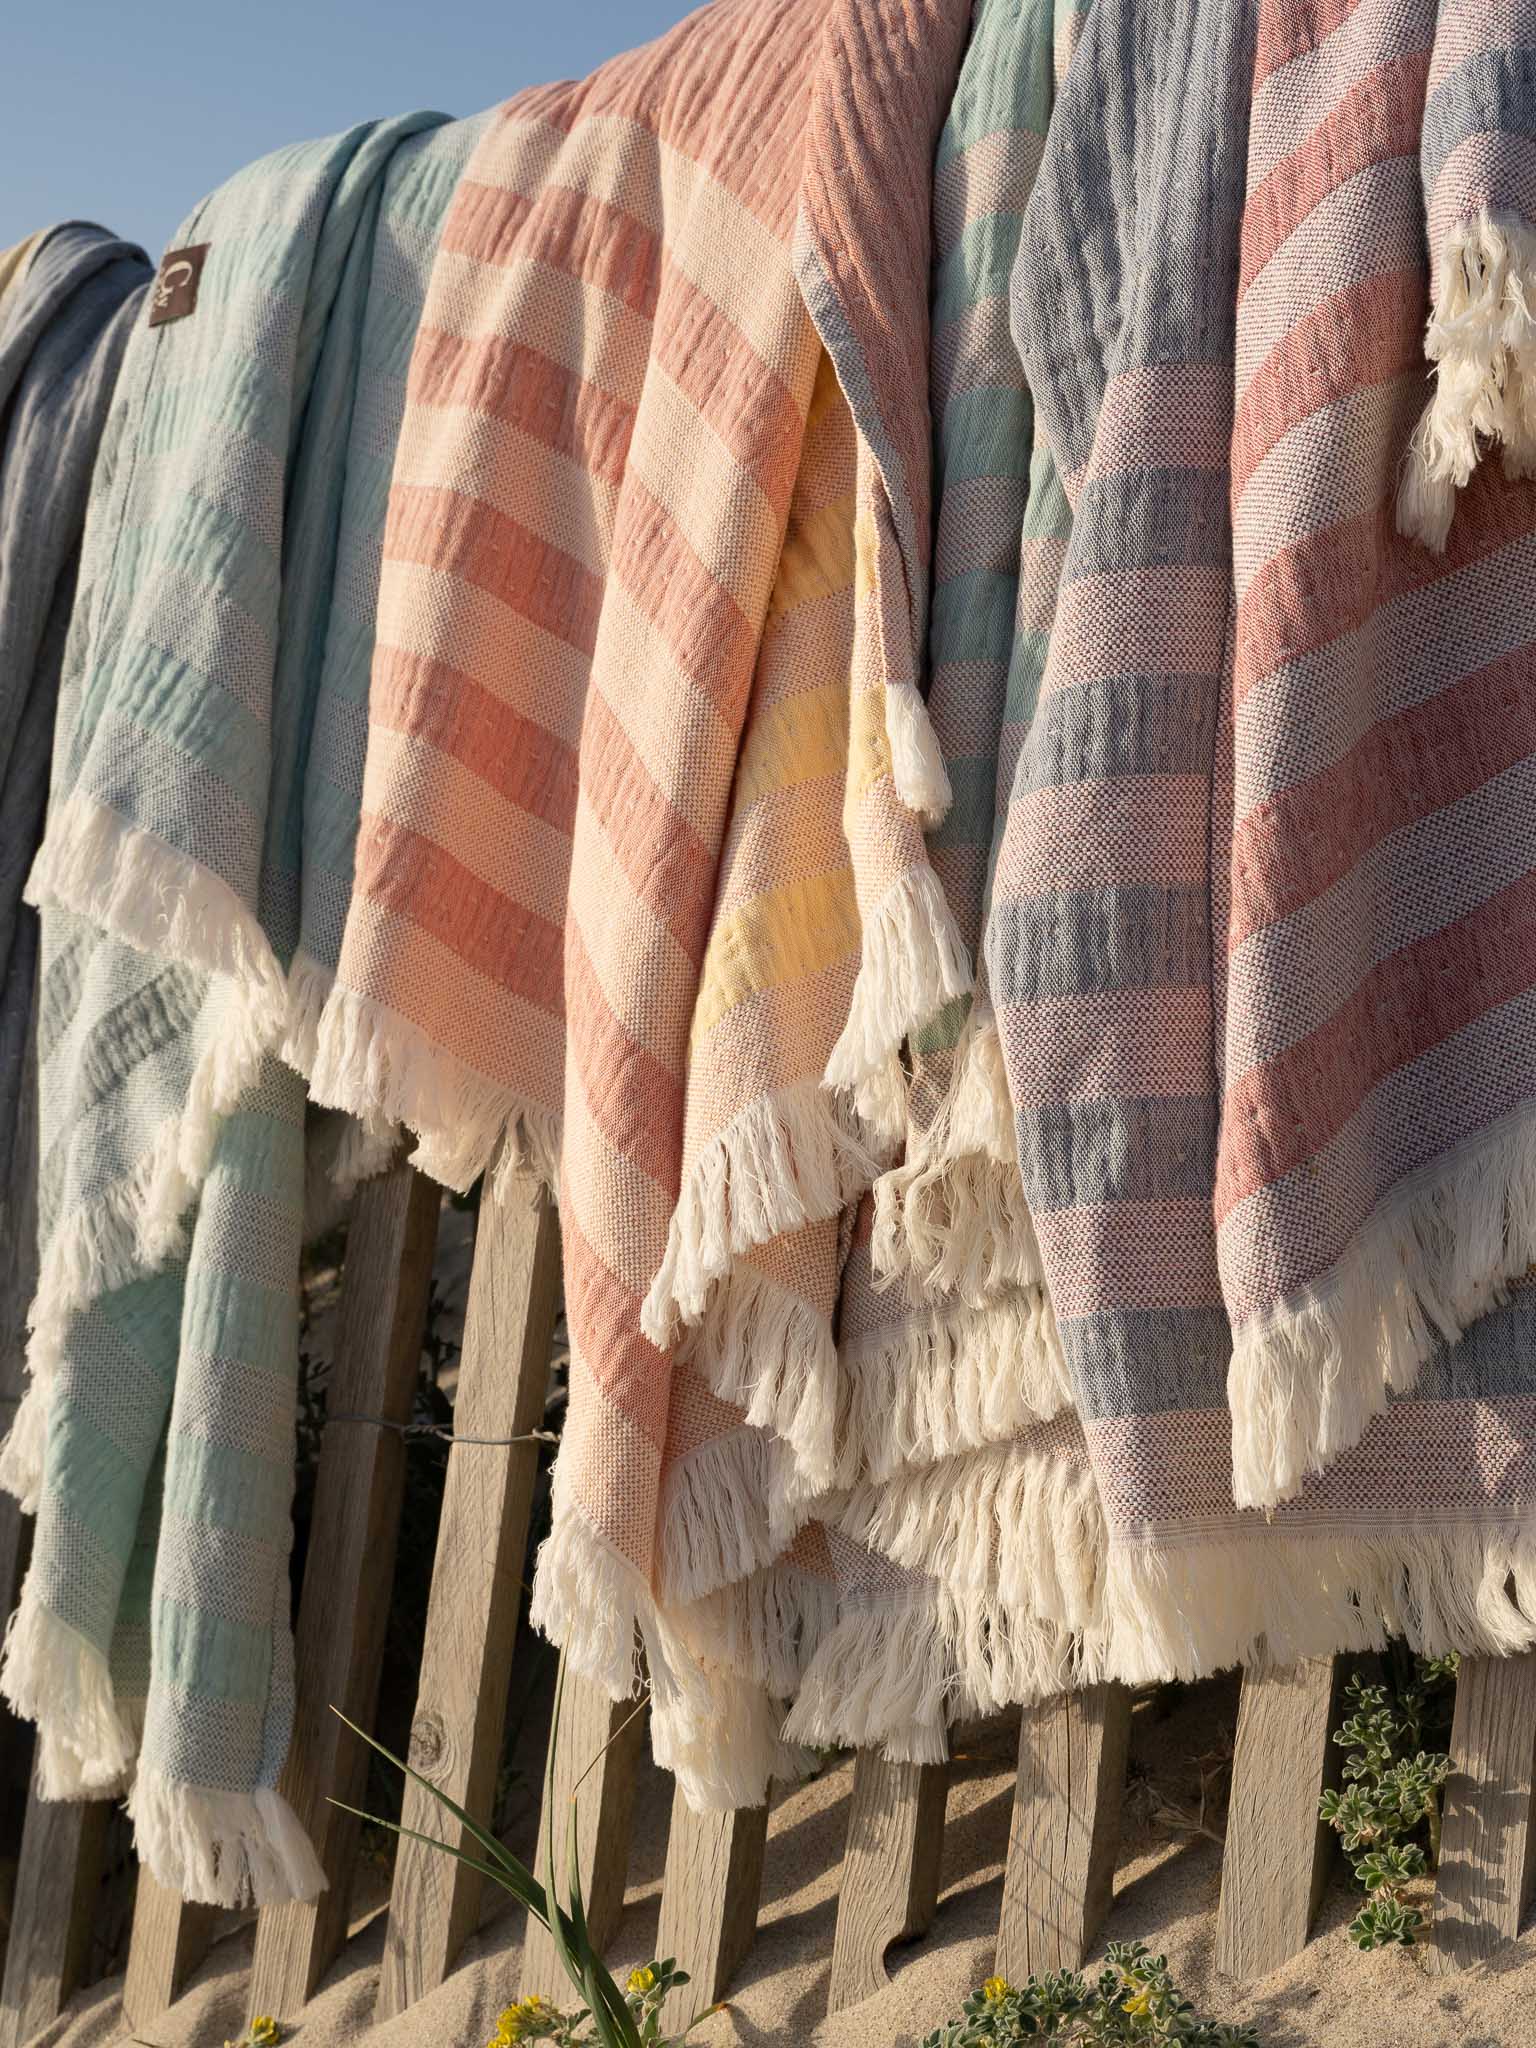 Gwery beach towels hanged on a beach